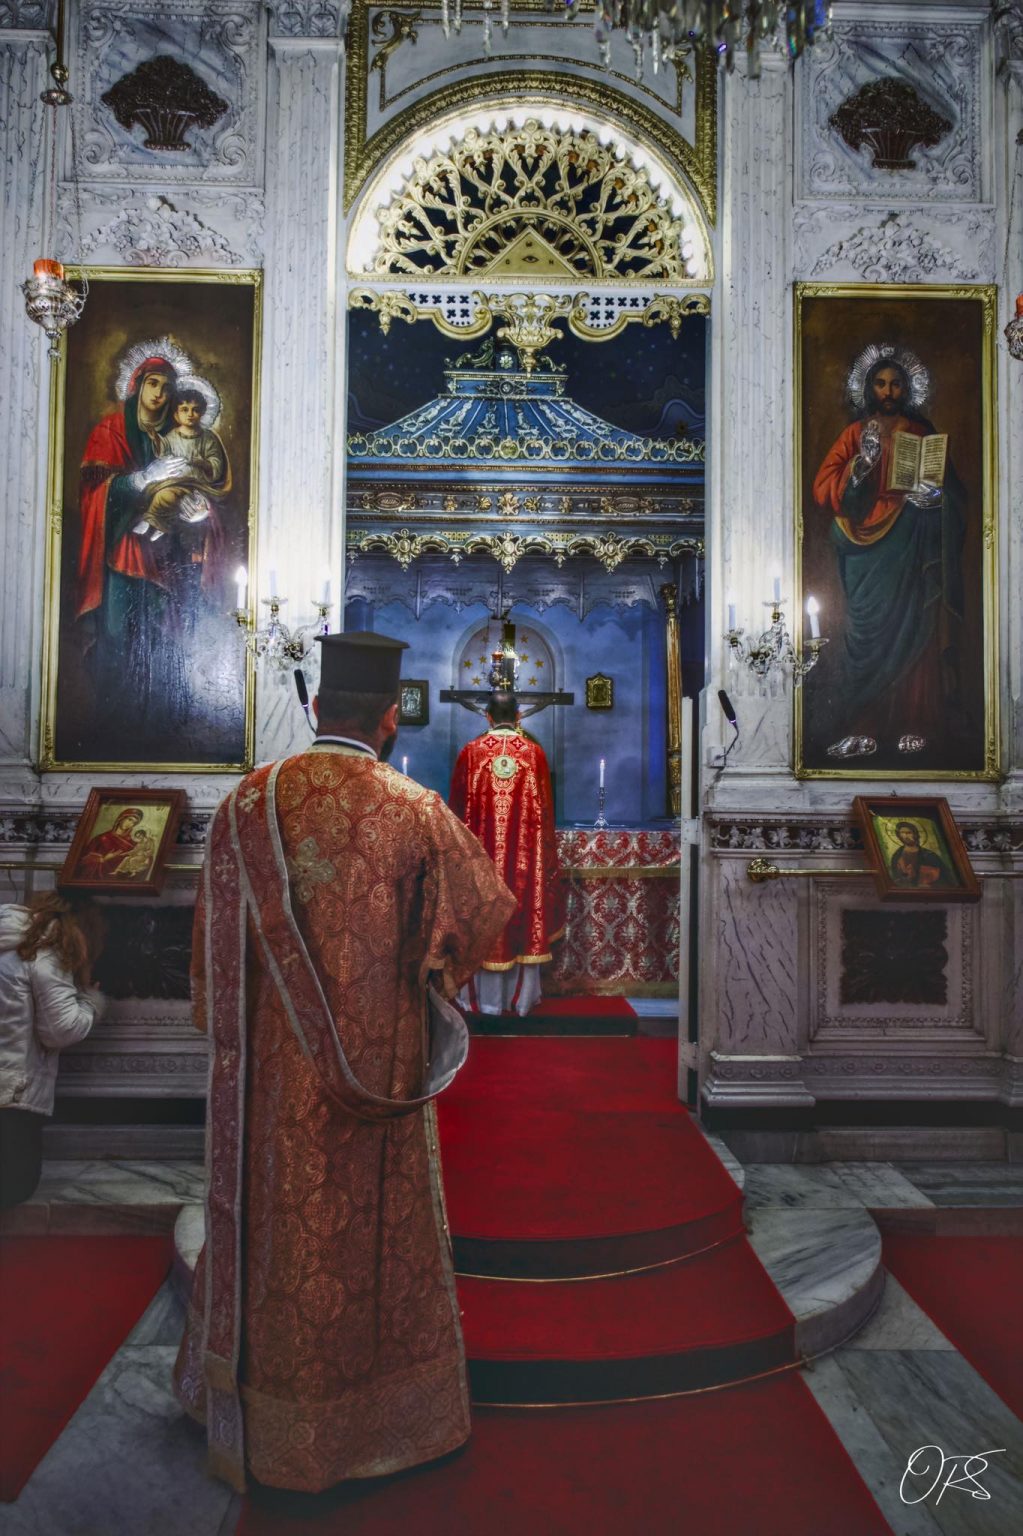 Elder Metropolitan Emmanuel of Chalcedon officiates at the Church of Saint Panteleimon, Kouskountzoukion